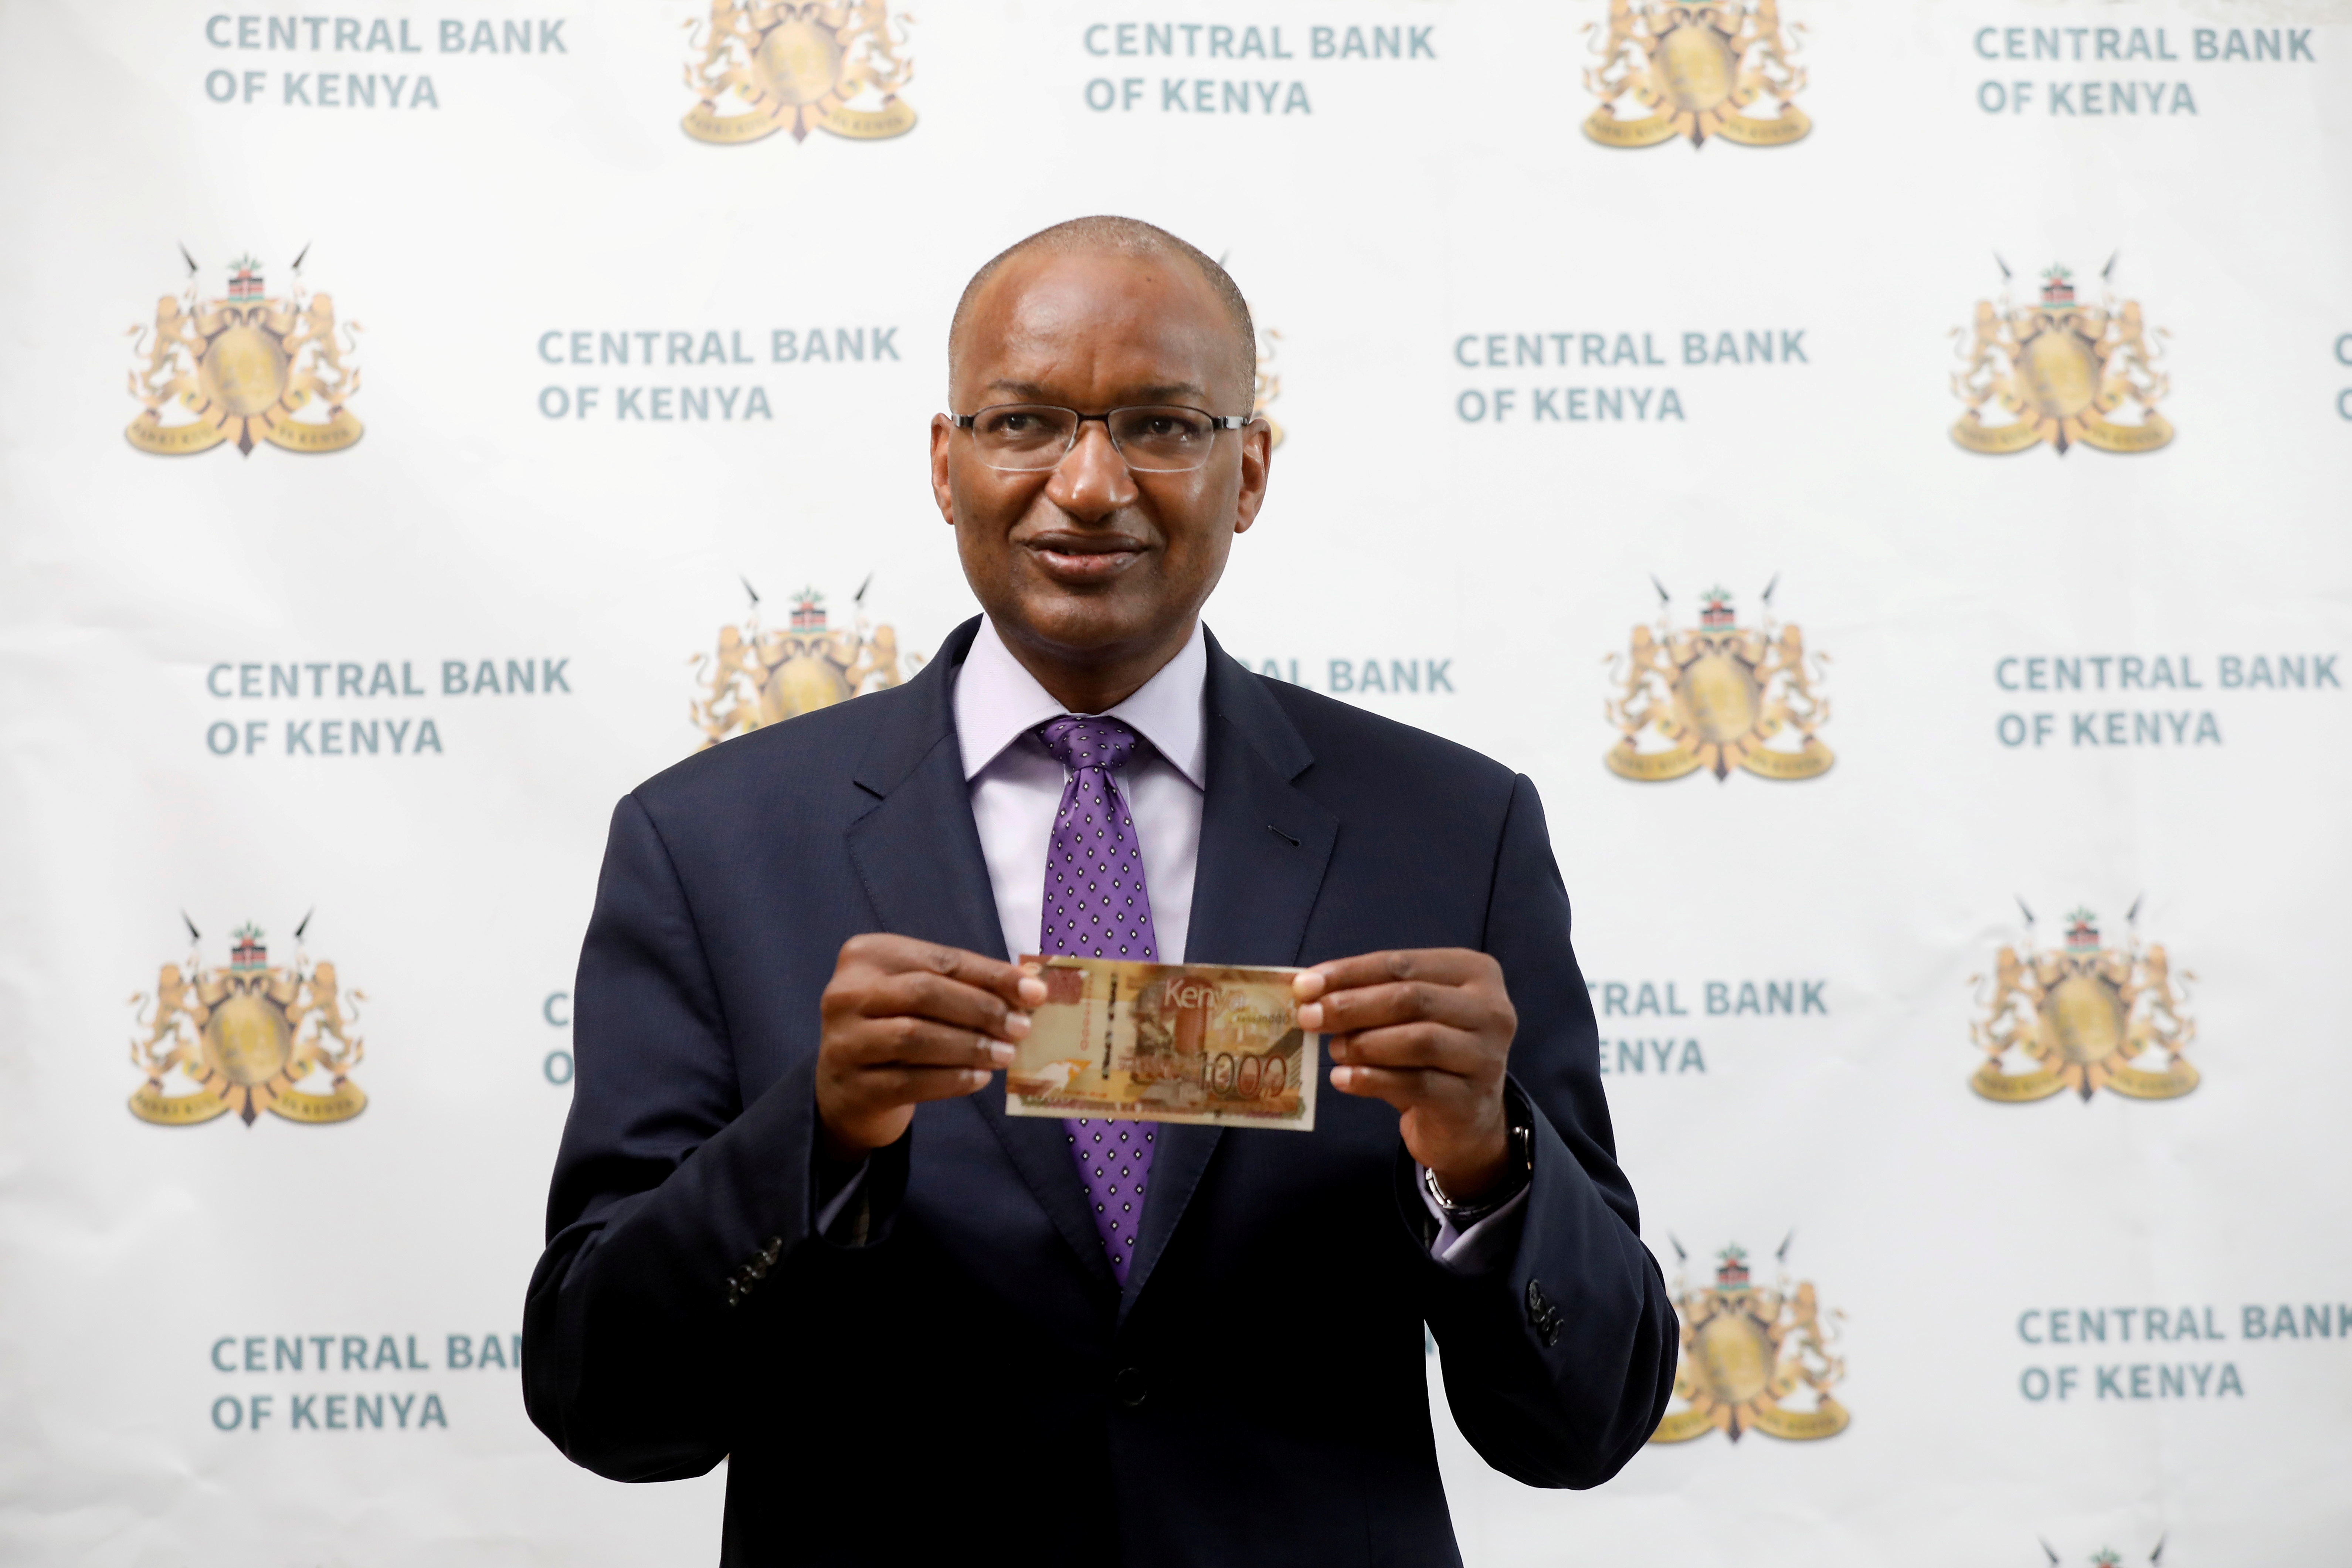  Kenya Central Bank Governor Patrick Njoroge displays the newly designed 1000 Kenyan shilling bank note during a news conference at the Central Bank in Nairobi, Kenya, June 3, 2019. REUTERS/Baz Ratner/File Photo